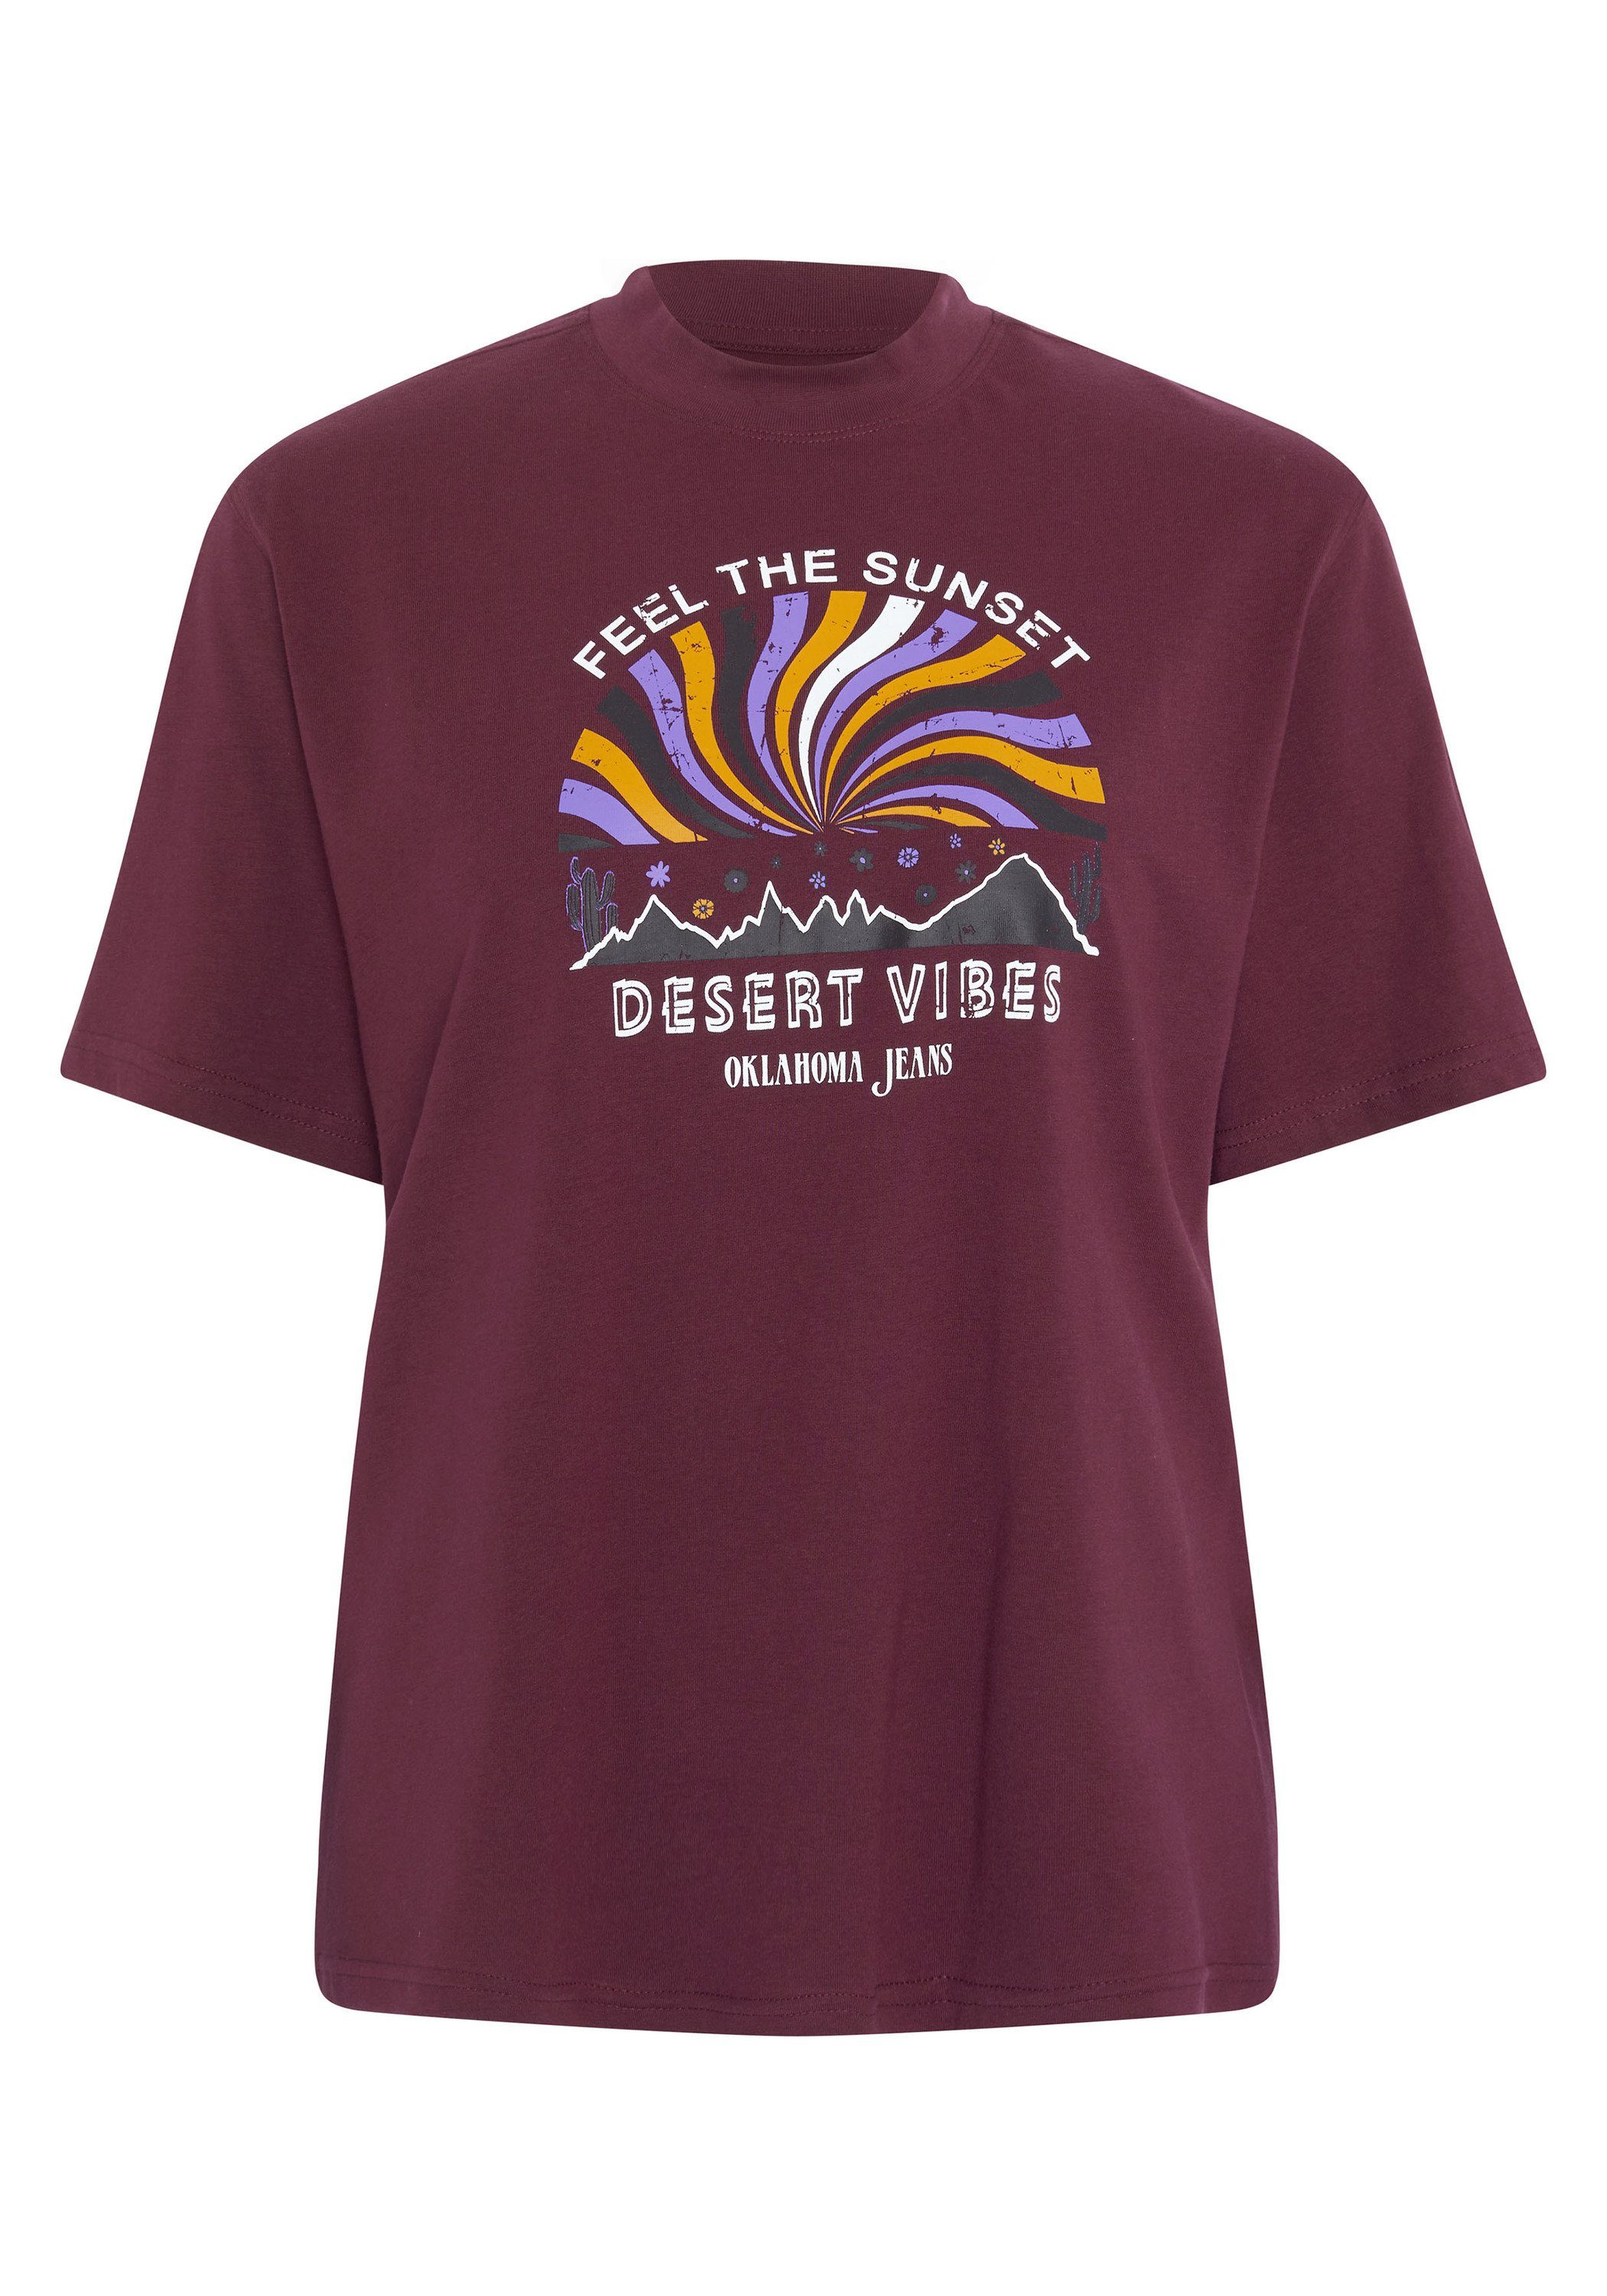 Oklahoma Jeans Print-Shirt mit Desert-Motiv 19-1528 Windsor Wine